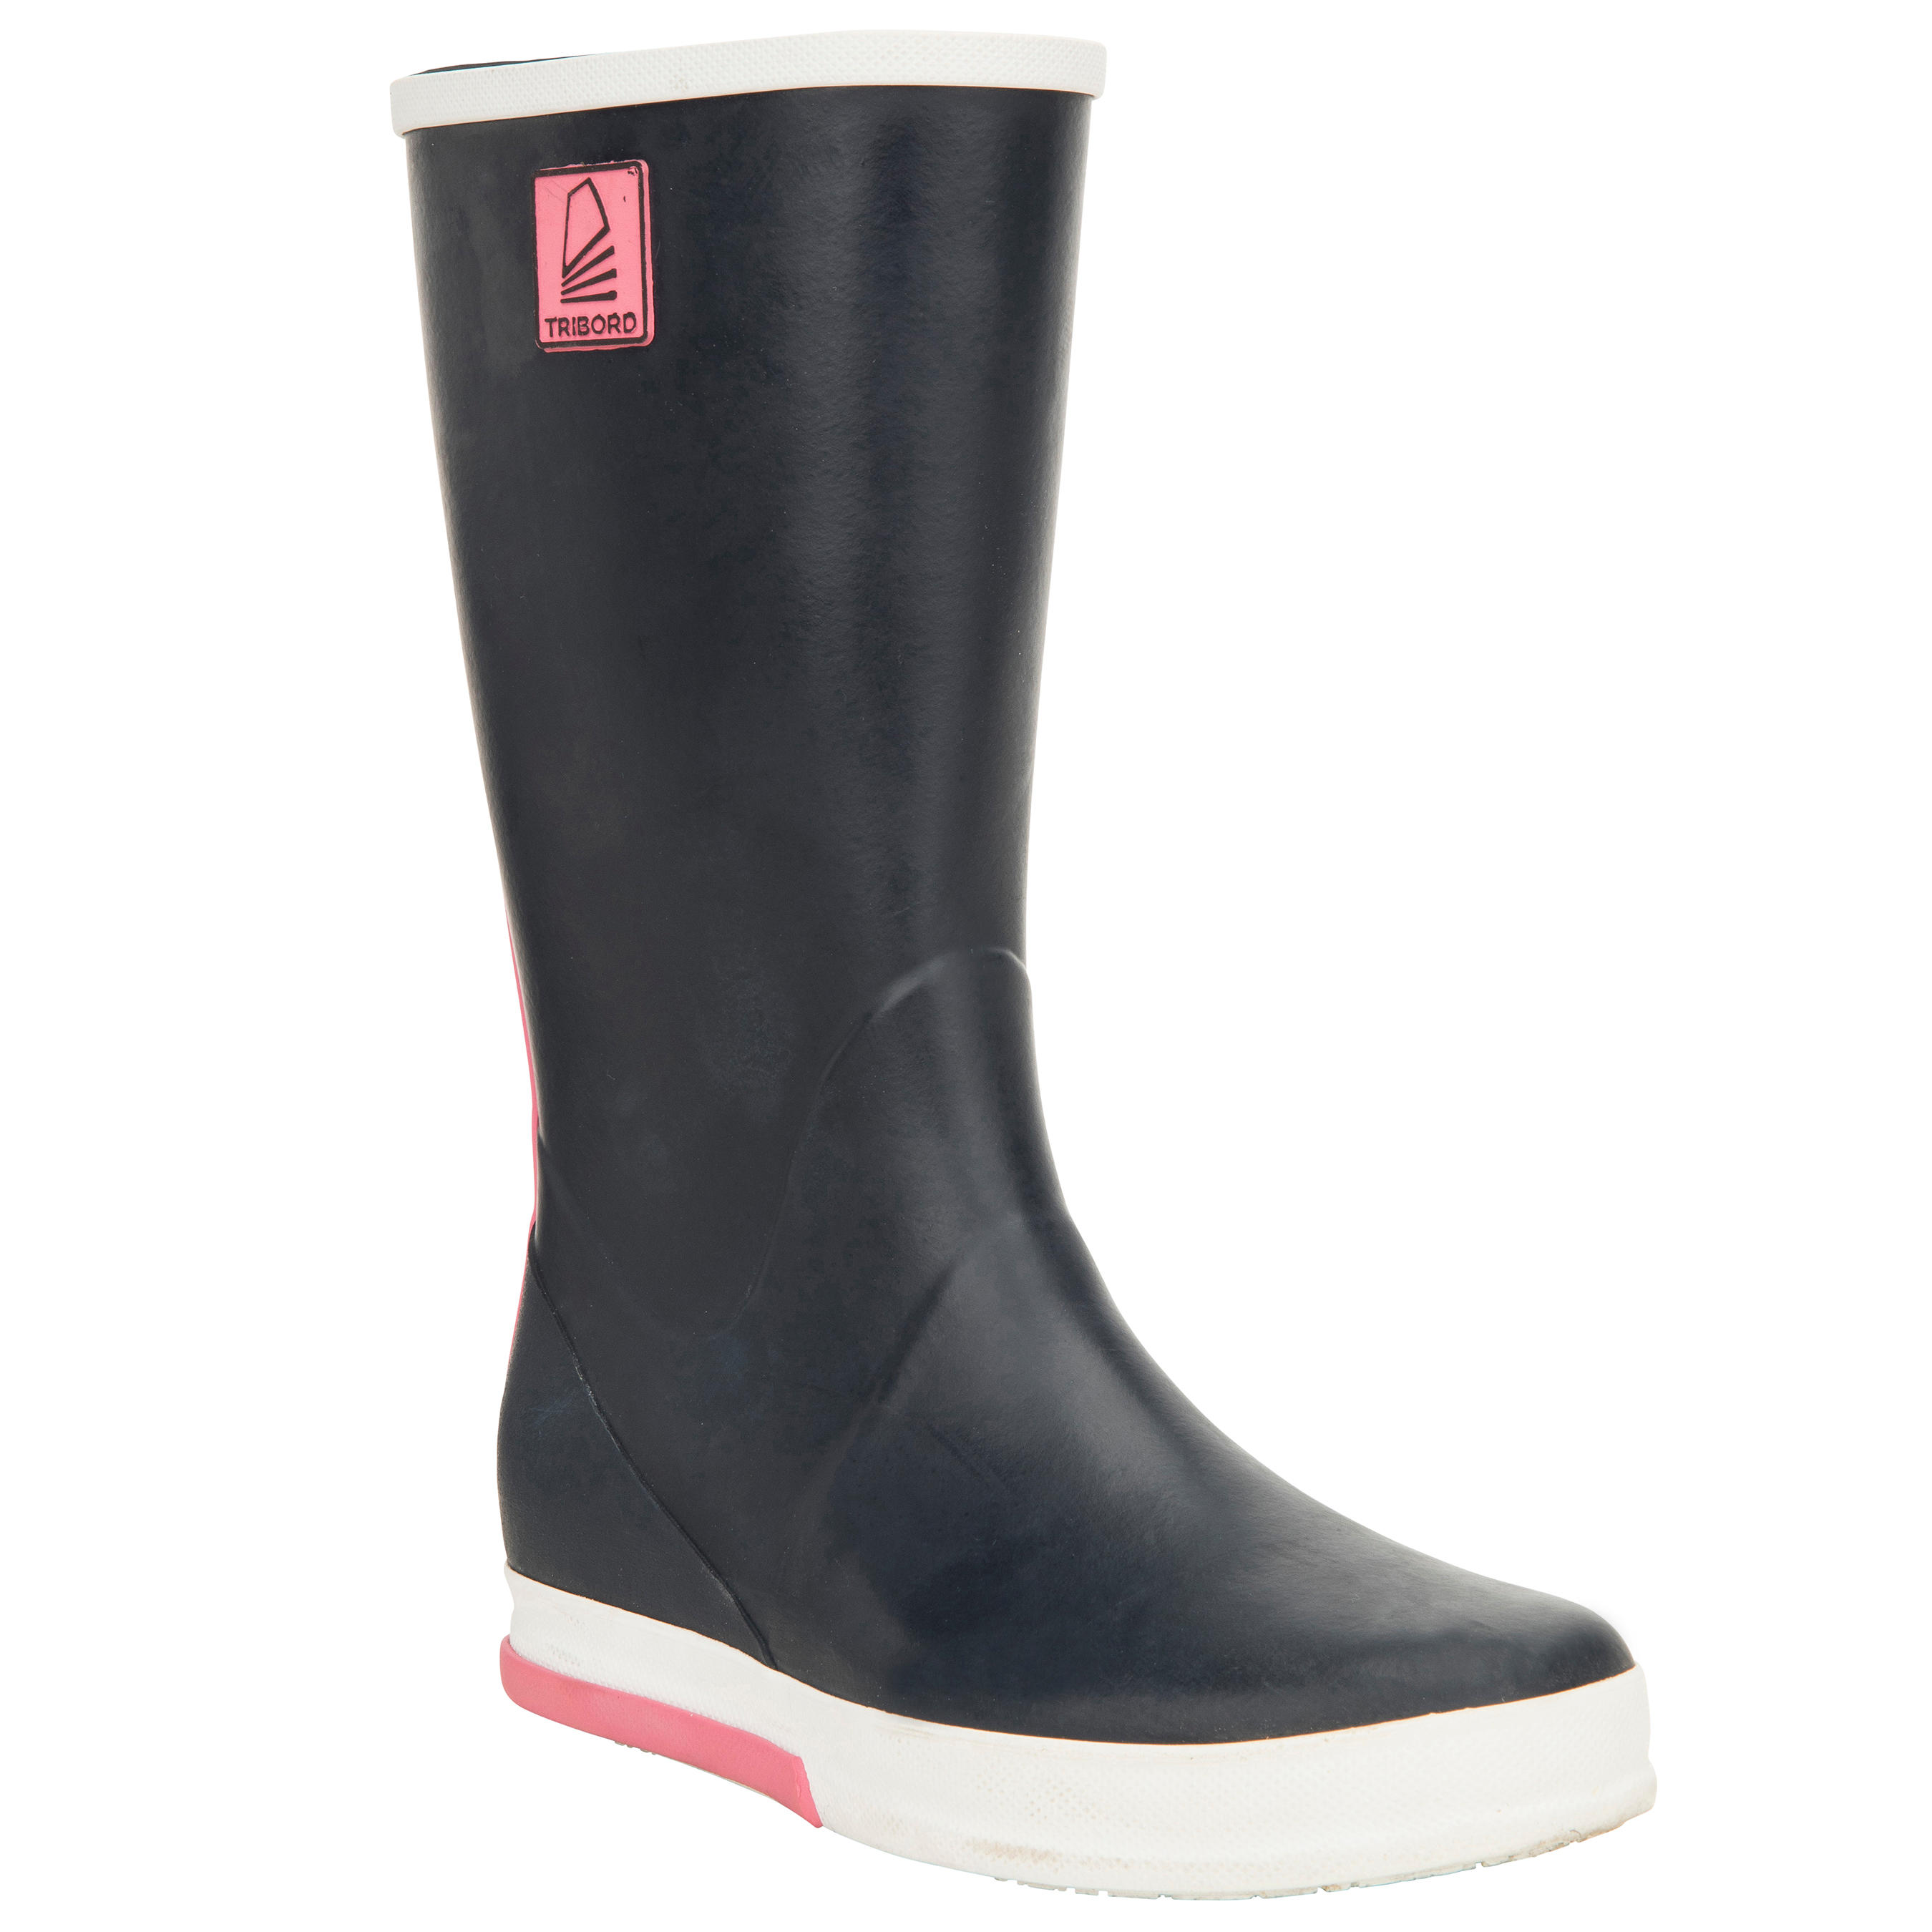 B500 Adult Sailing Boots - Grey / Pink 1/4